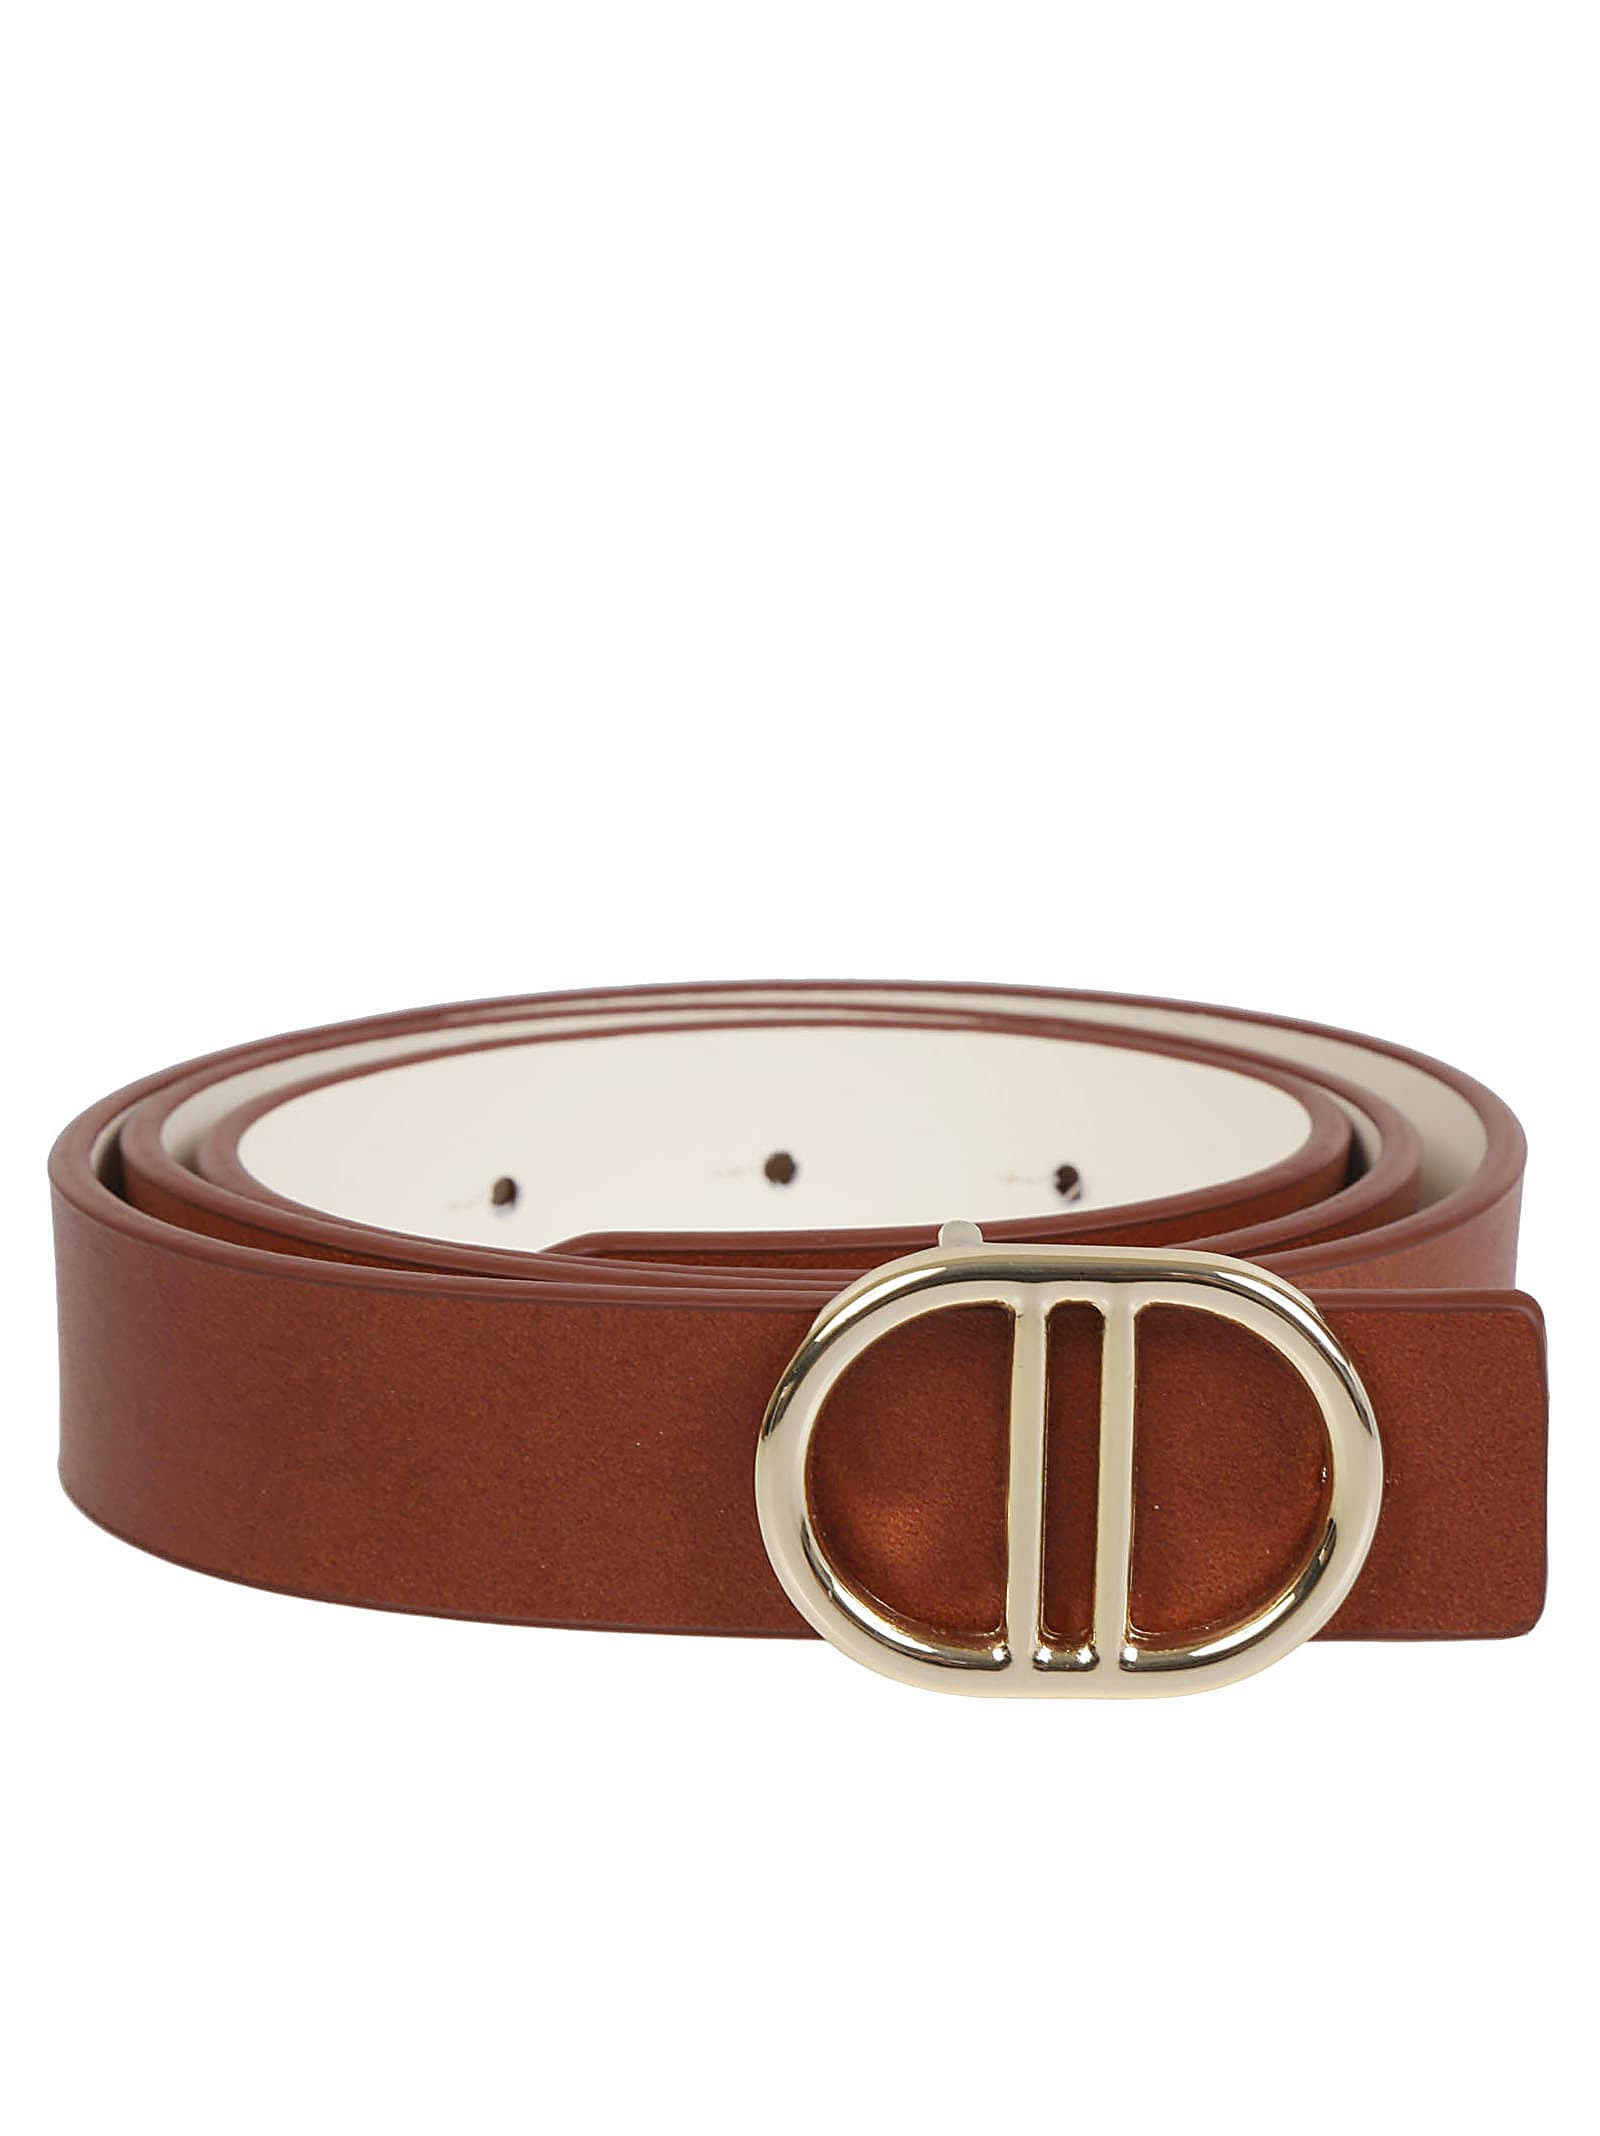 Crida Milano Double Leather Belt In Cuoio/bianco